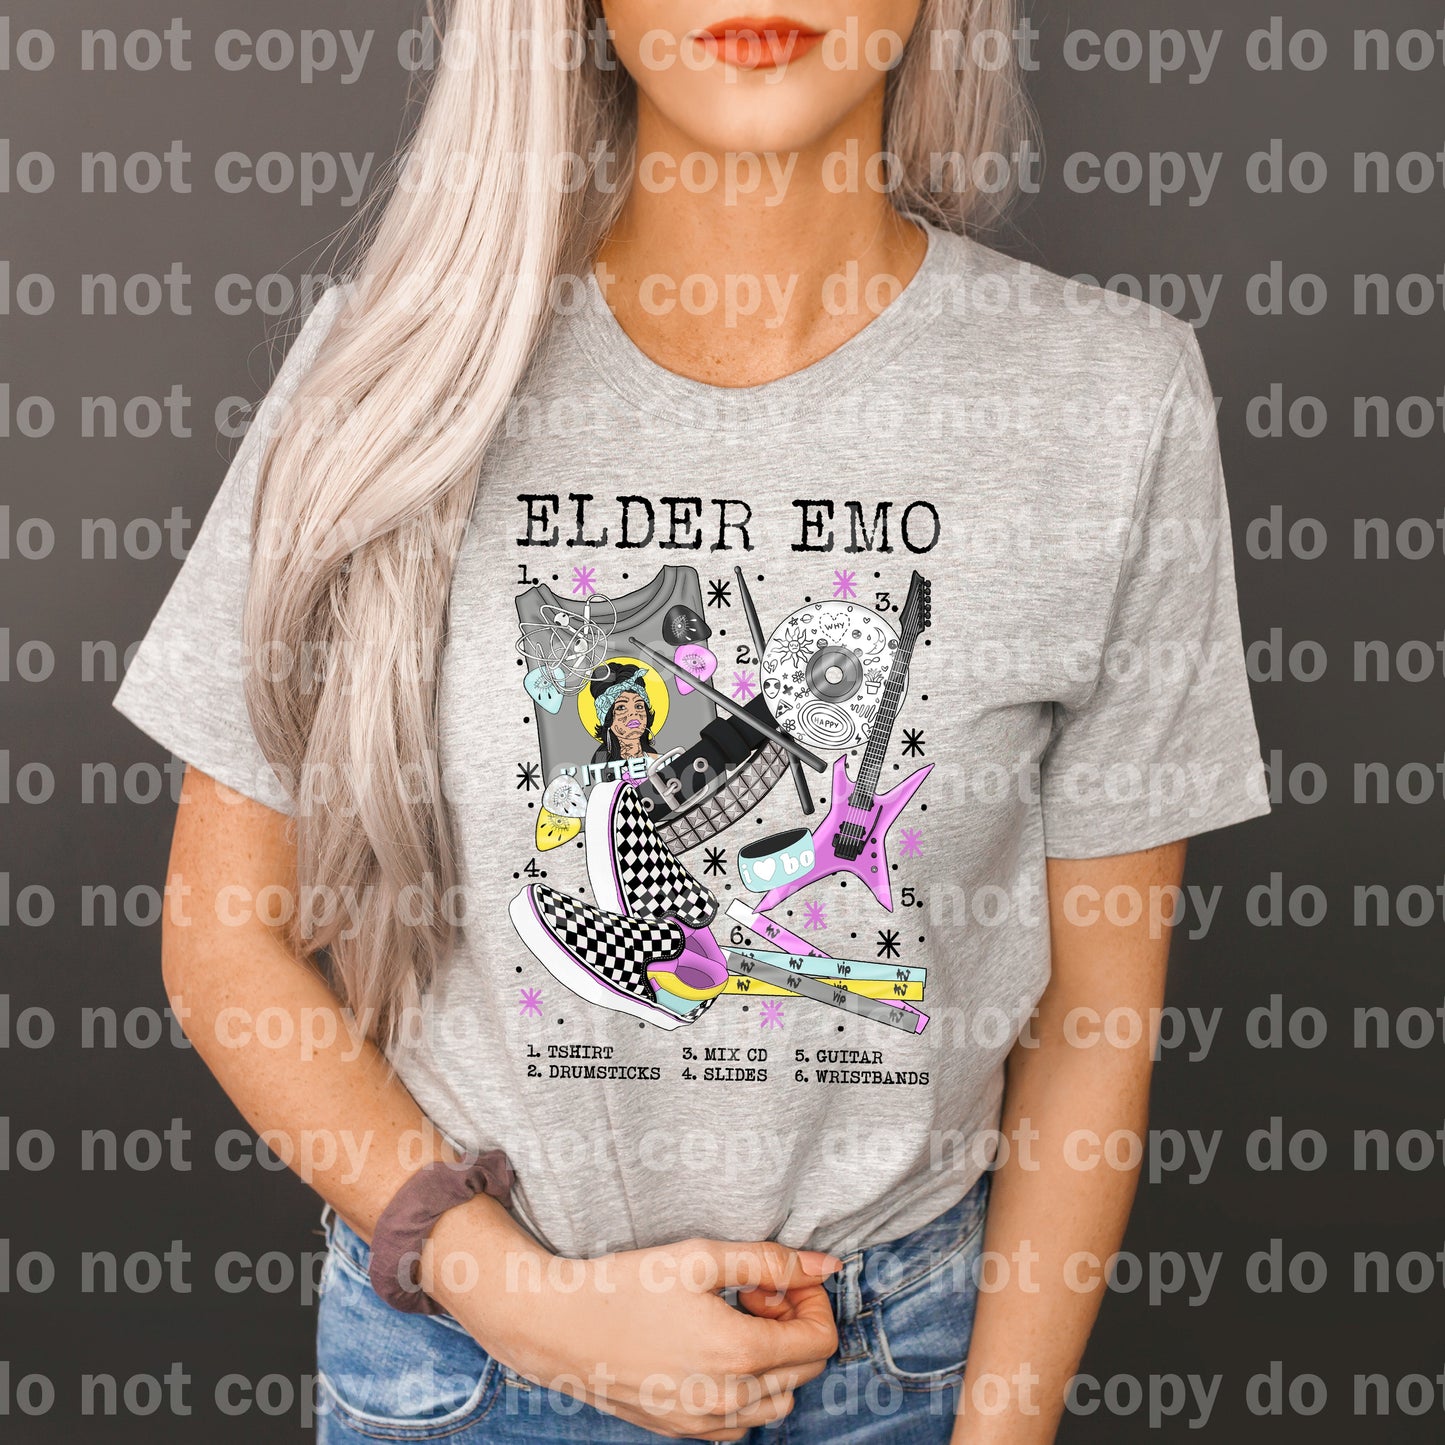 Elder Emo Vans Chart Tshirt Drumsticks Mix CD Sliders Guitar Wristbands Dream Print or Sublimation Print